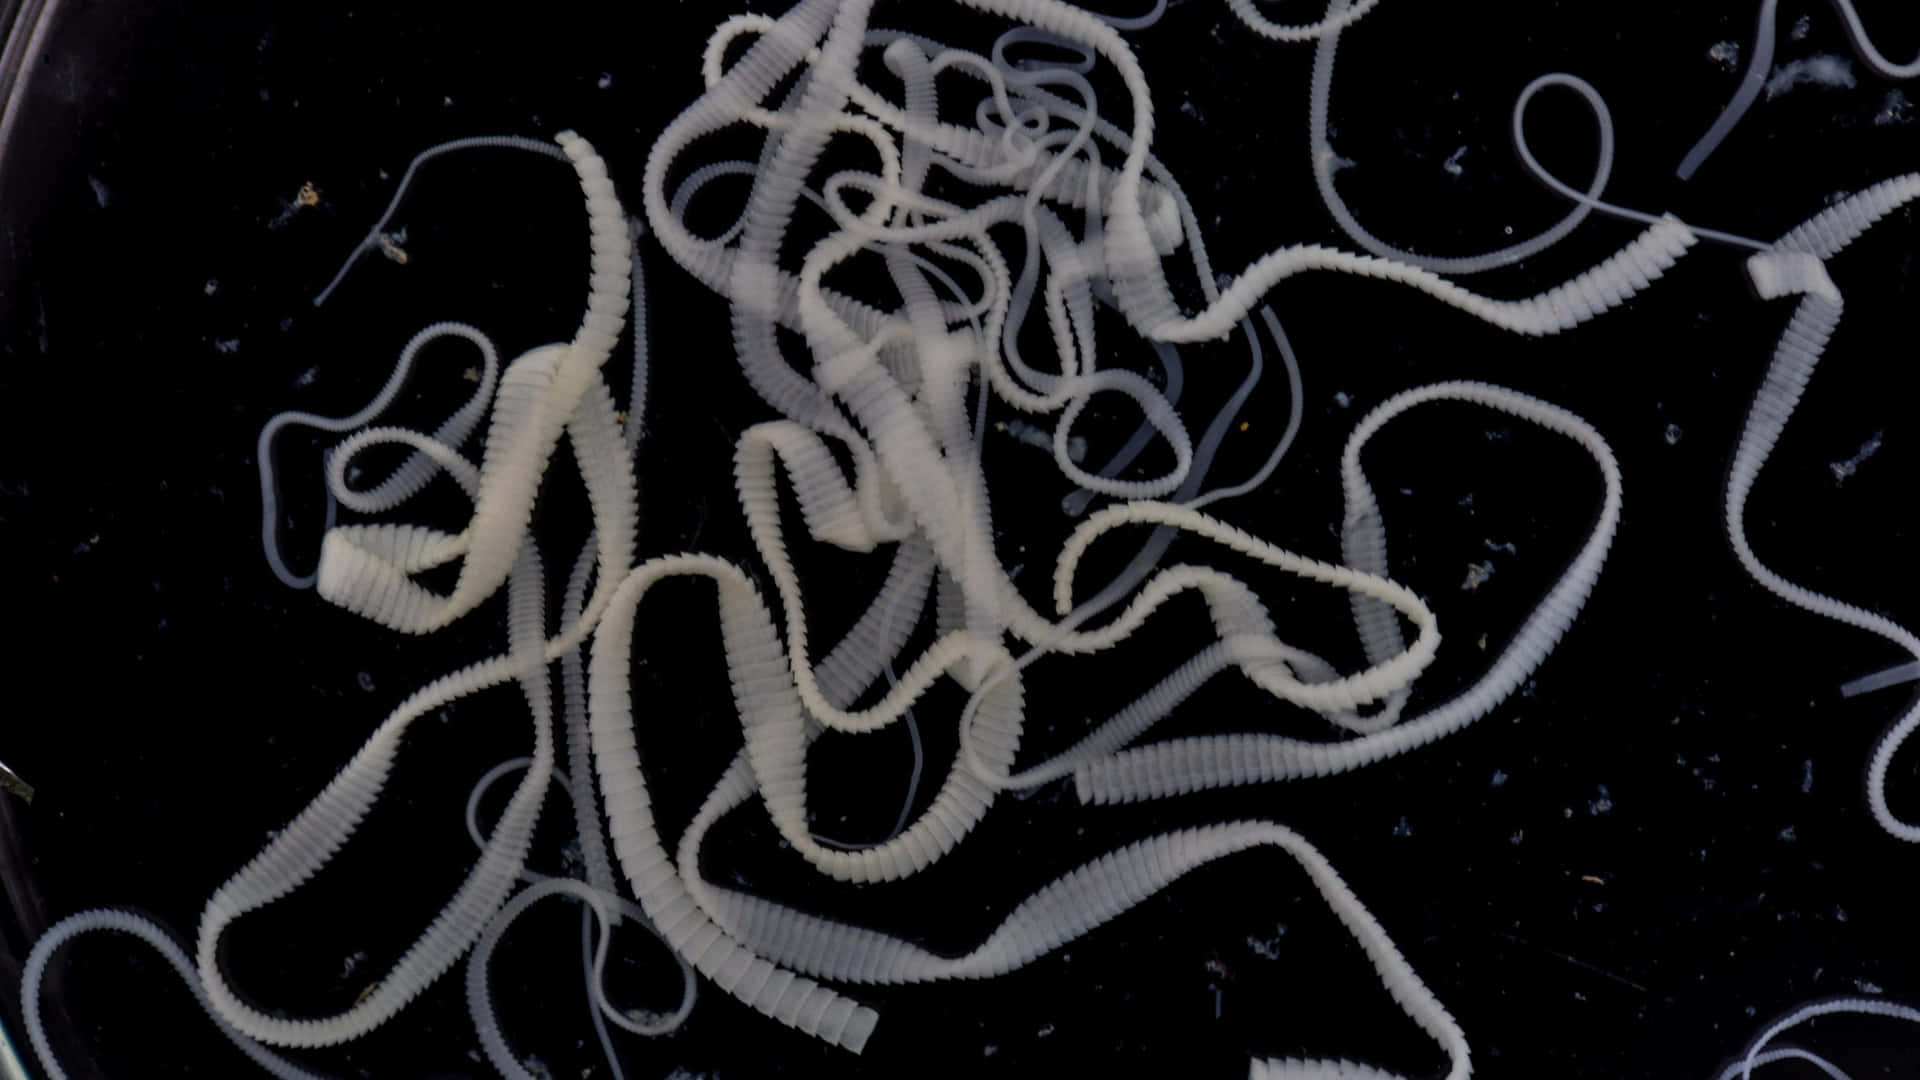 Tapeworm Infestation Dark Background Wallpaper